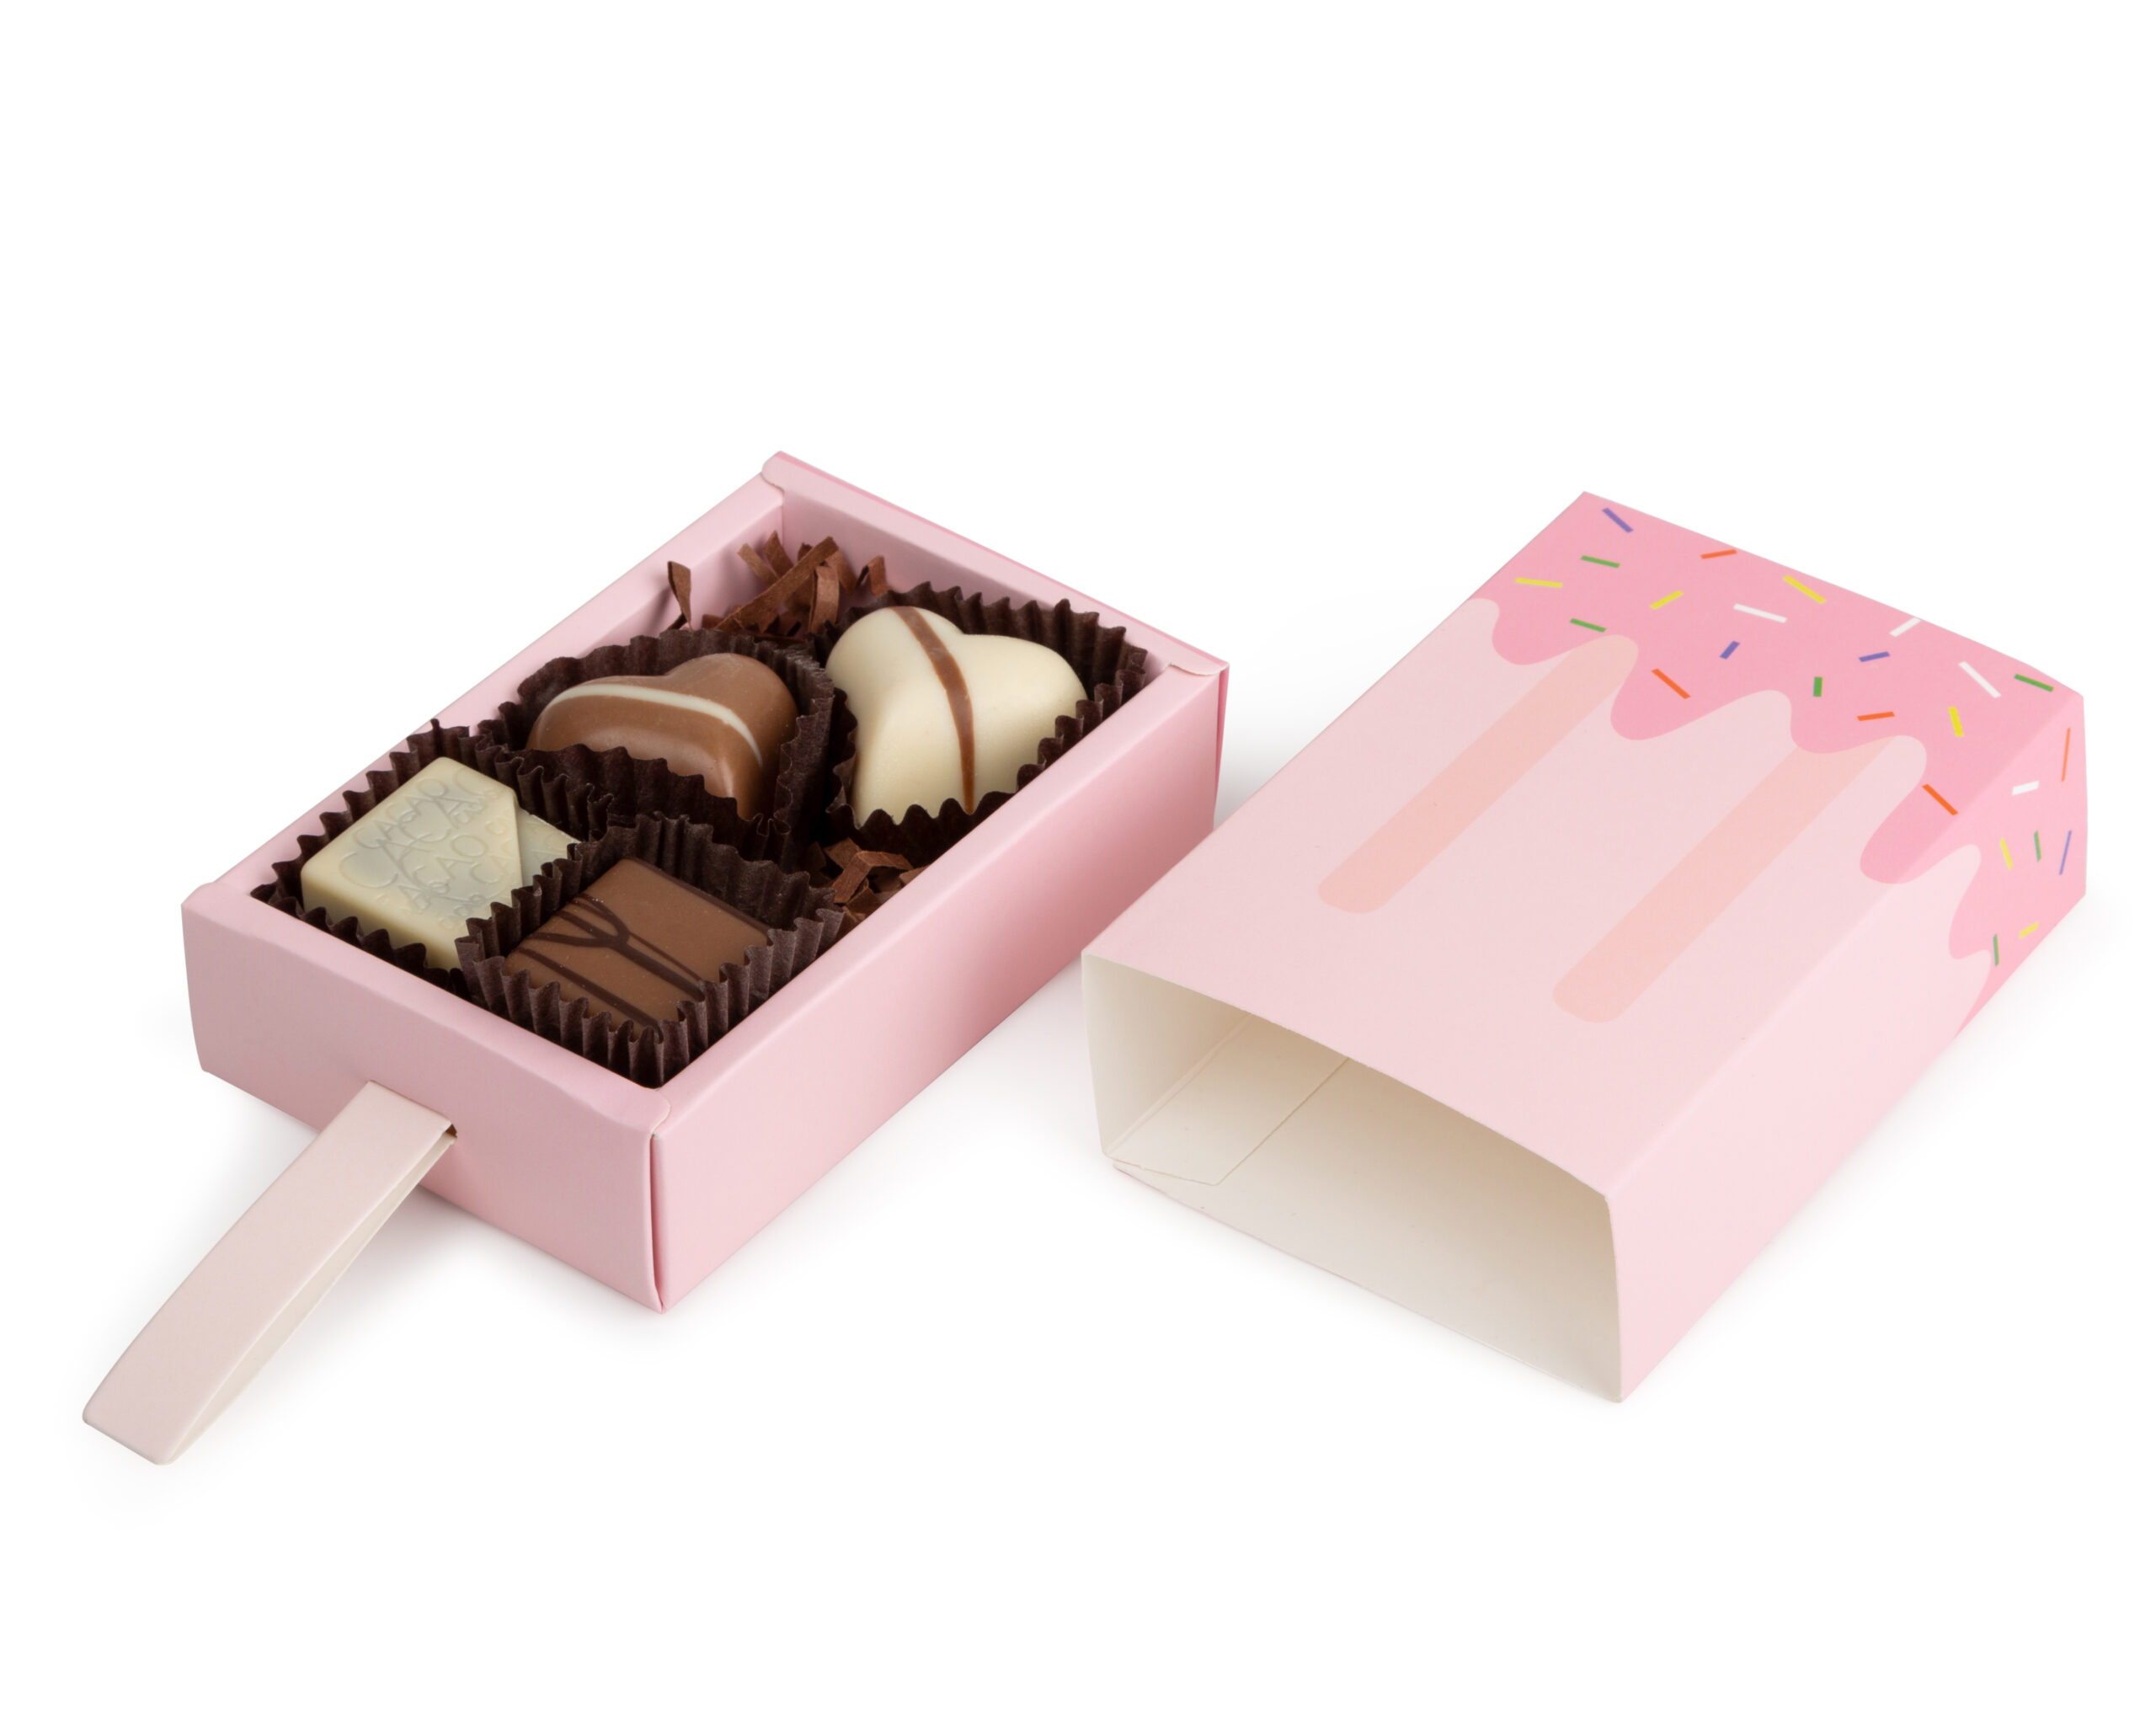 https://chocolatewise.com/wp-content/uploads/2021/01/Ice-cream-box-pink-01-scaled.jpg